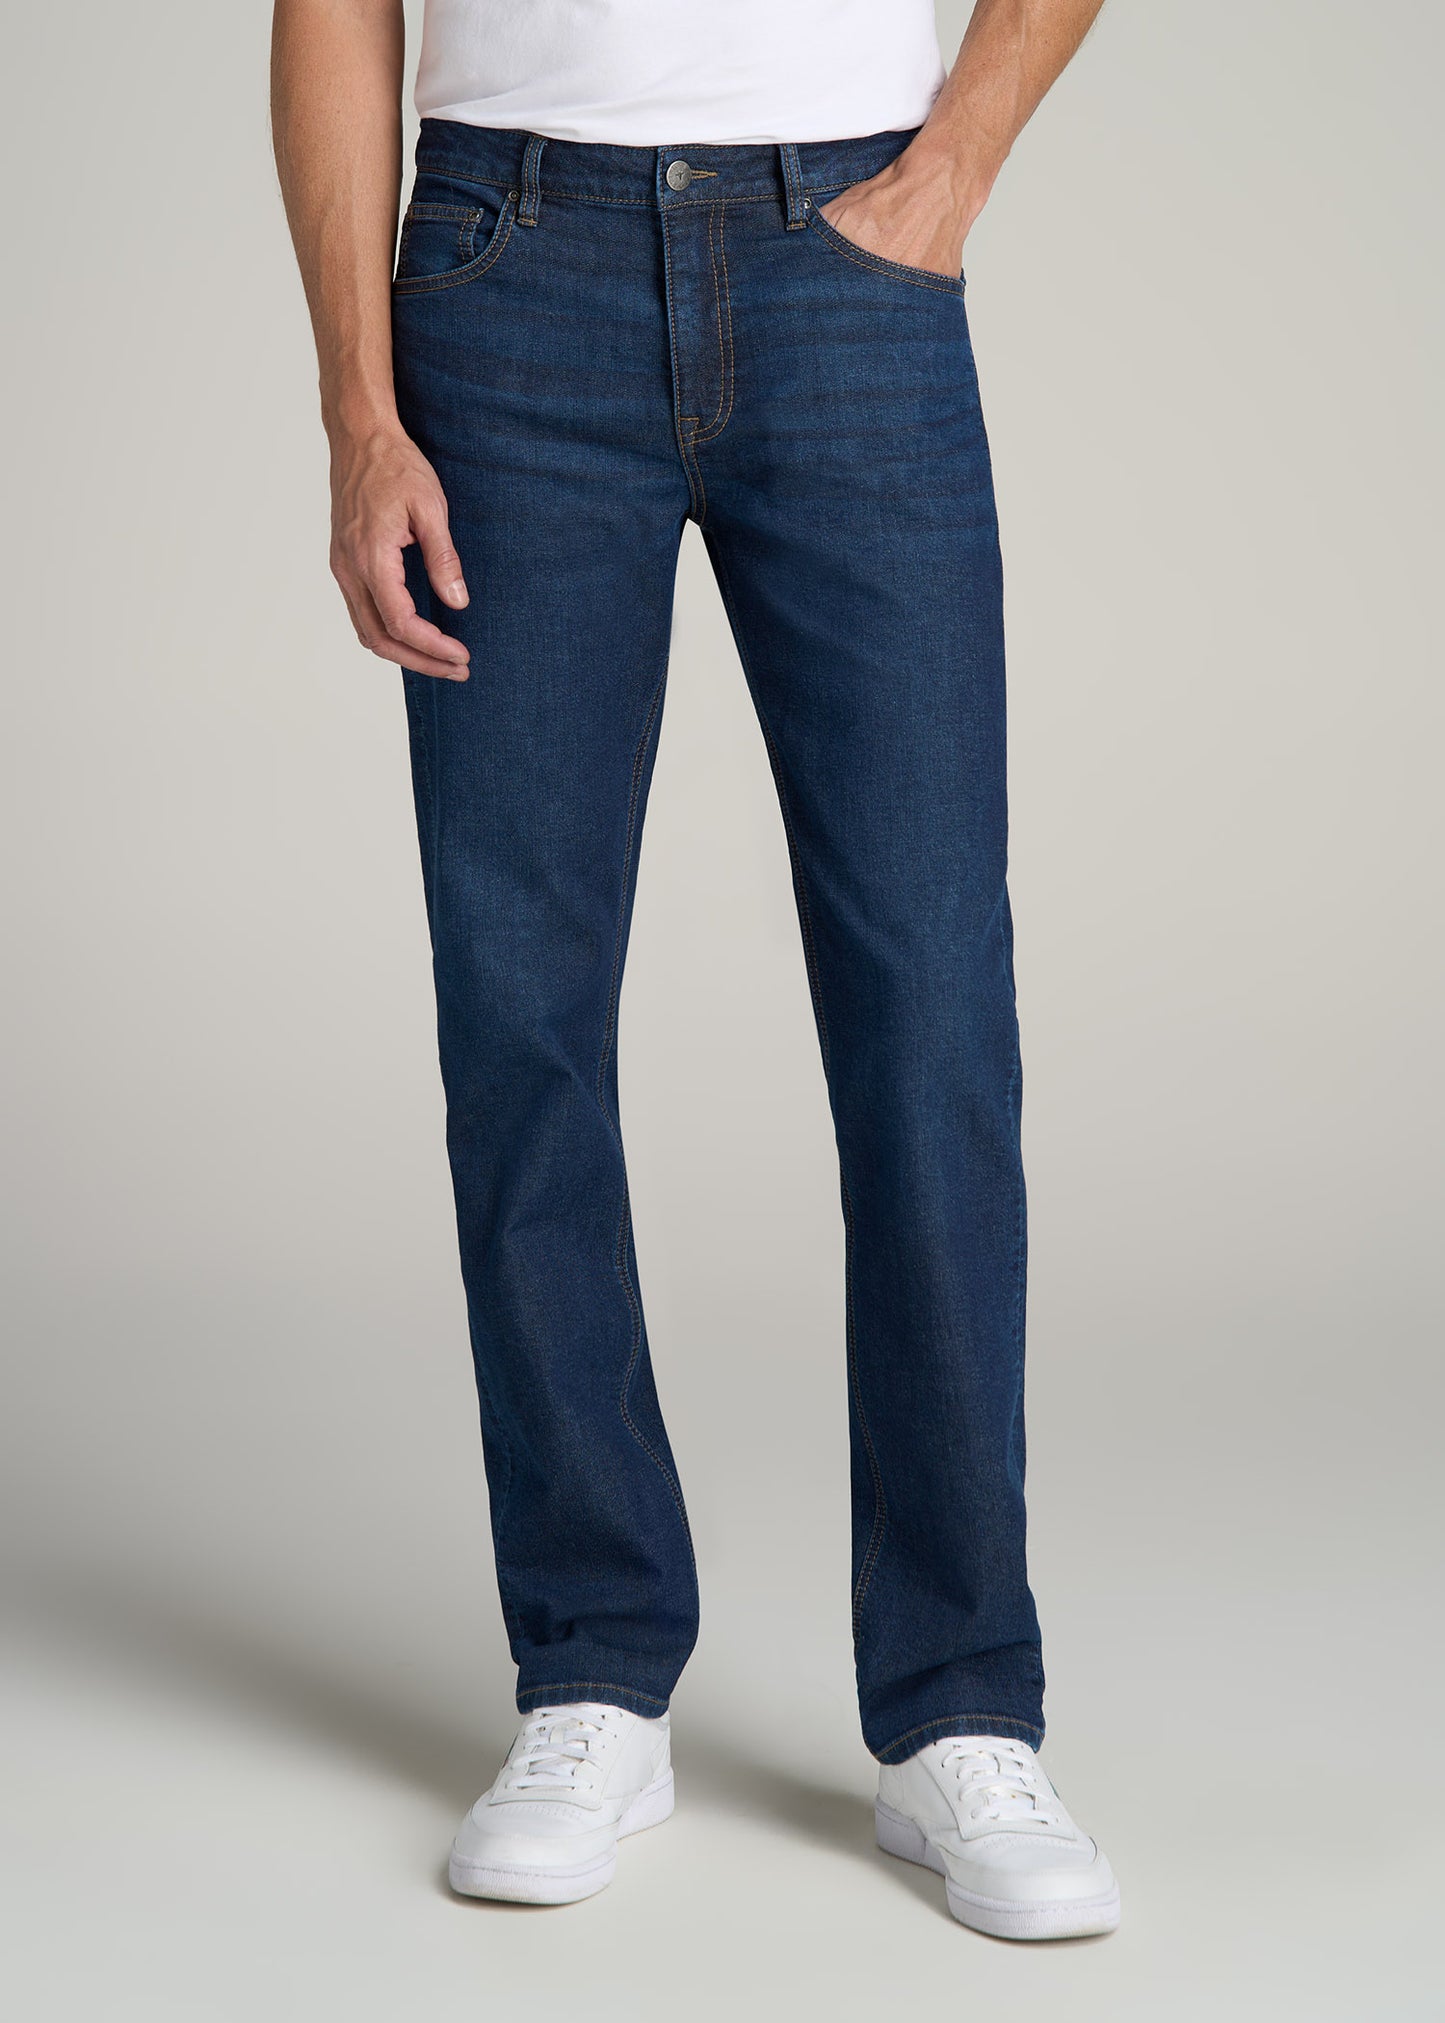 J1 STRAIGHT LEG Fleeced Jeans for Tall Men in Colorado Blue Wash